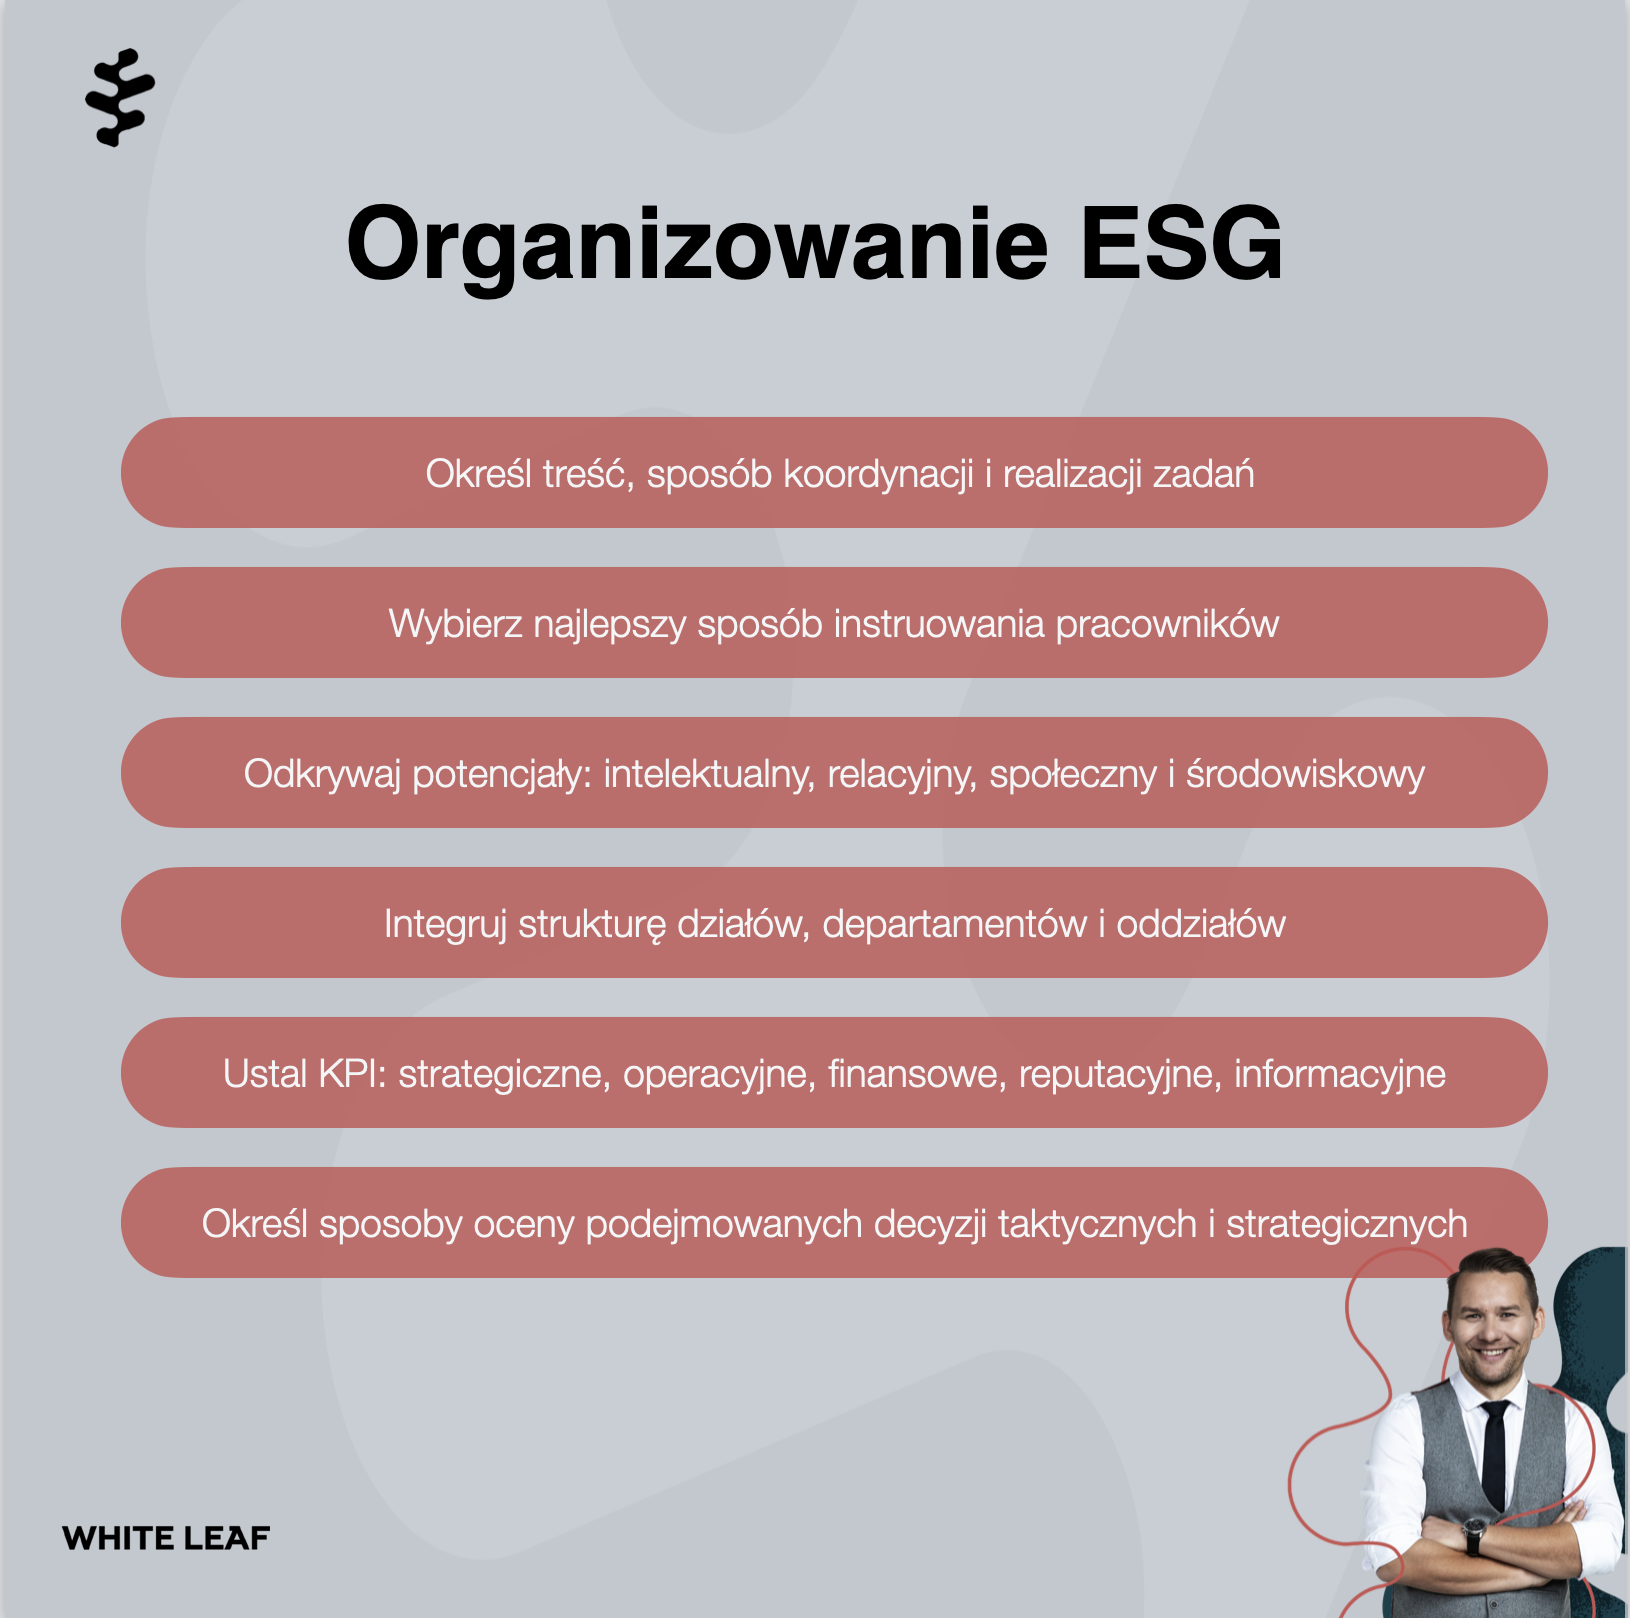 ESG organizowanie